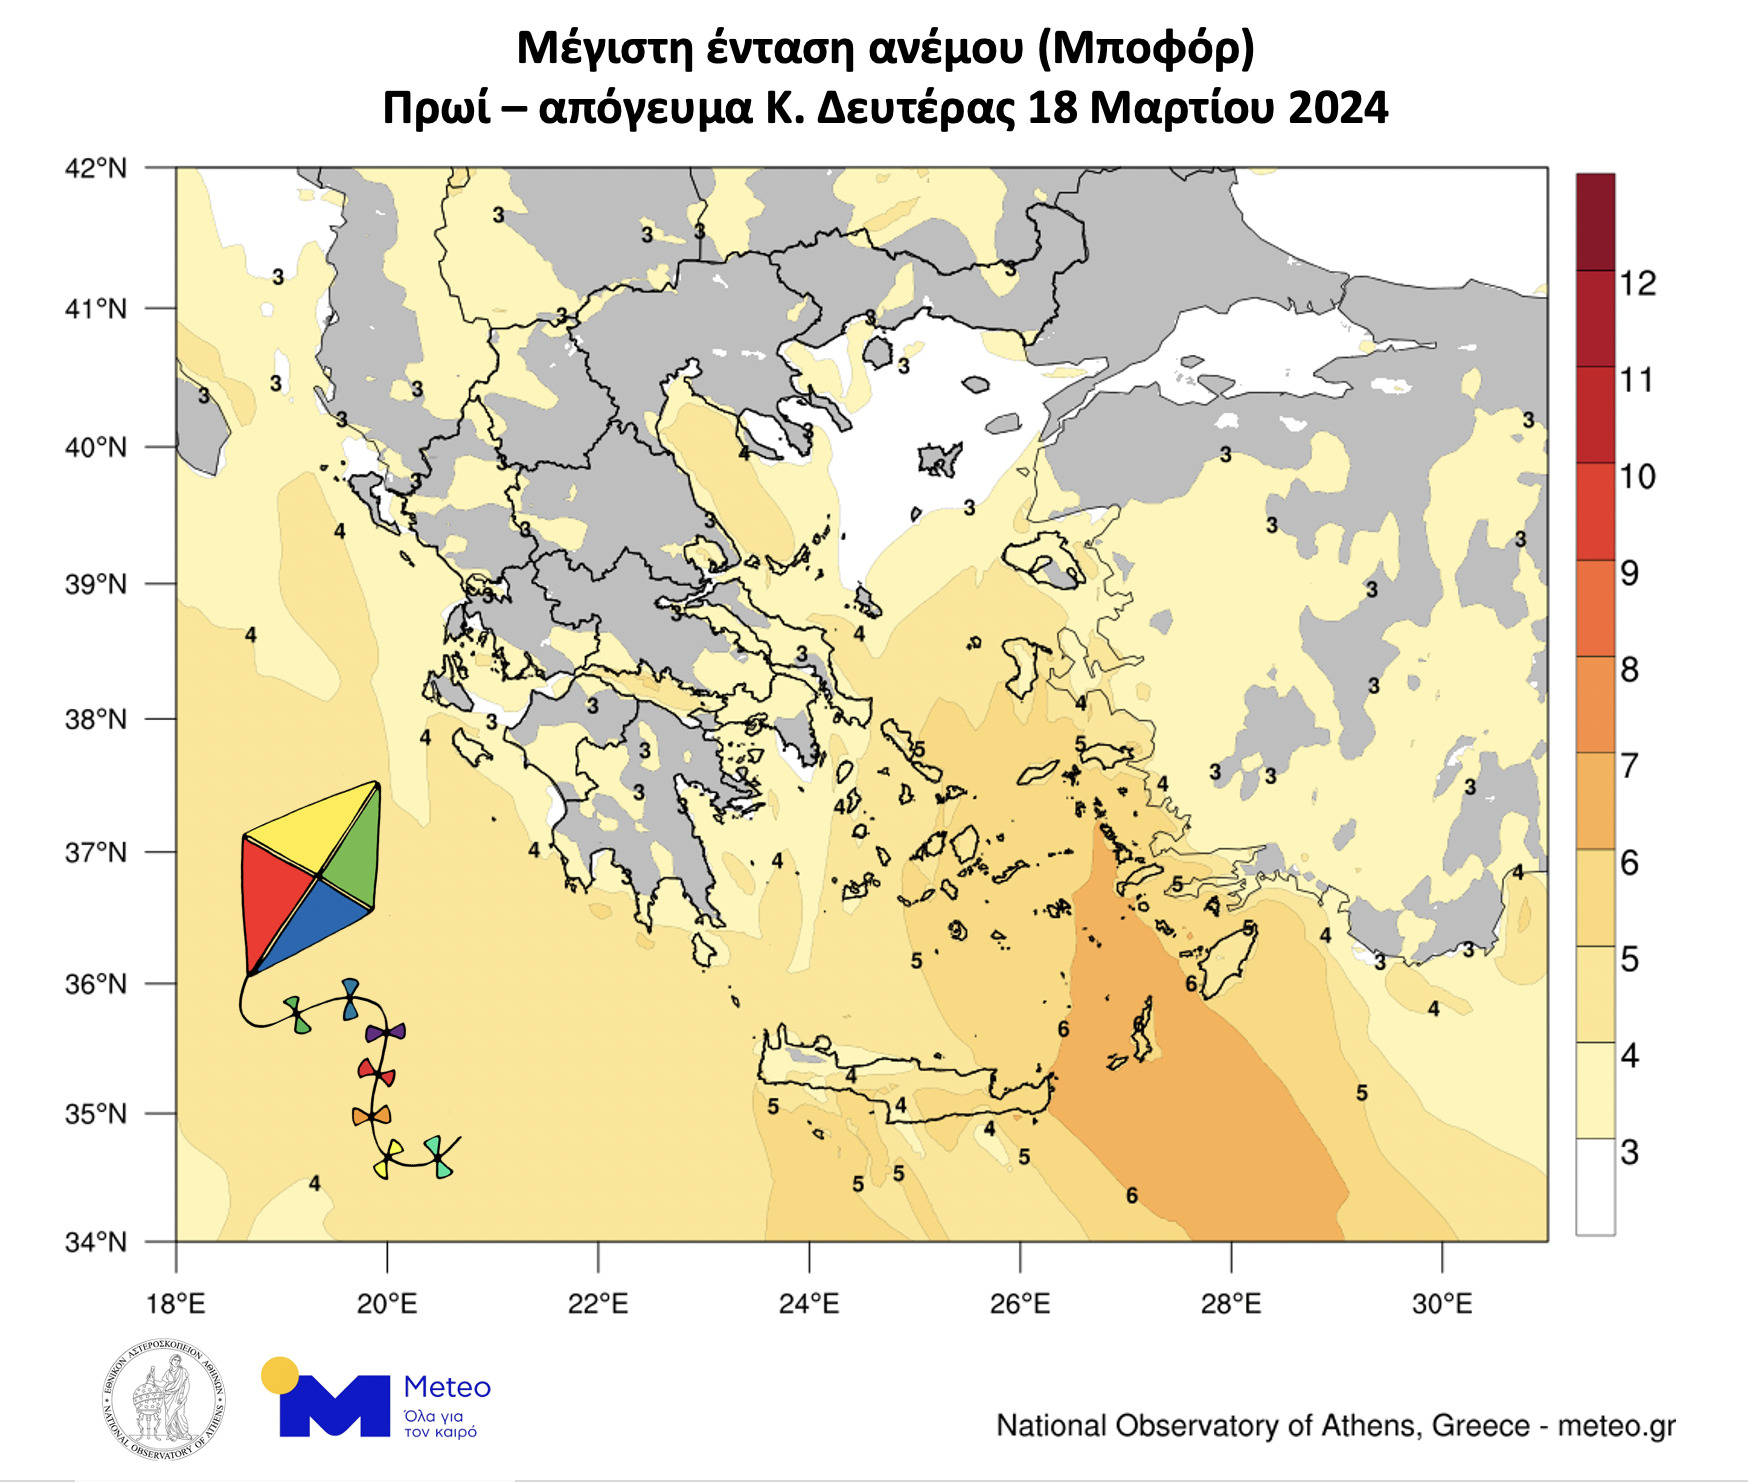 Meteo: Οι περιοχές που θα έχουν ιδανικό αέρα για πέταγμα χαρταετού την Καθαρά Δευτέρα